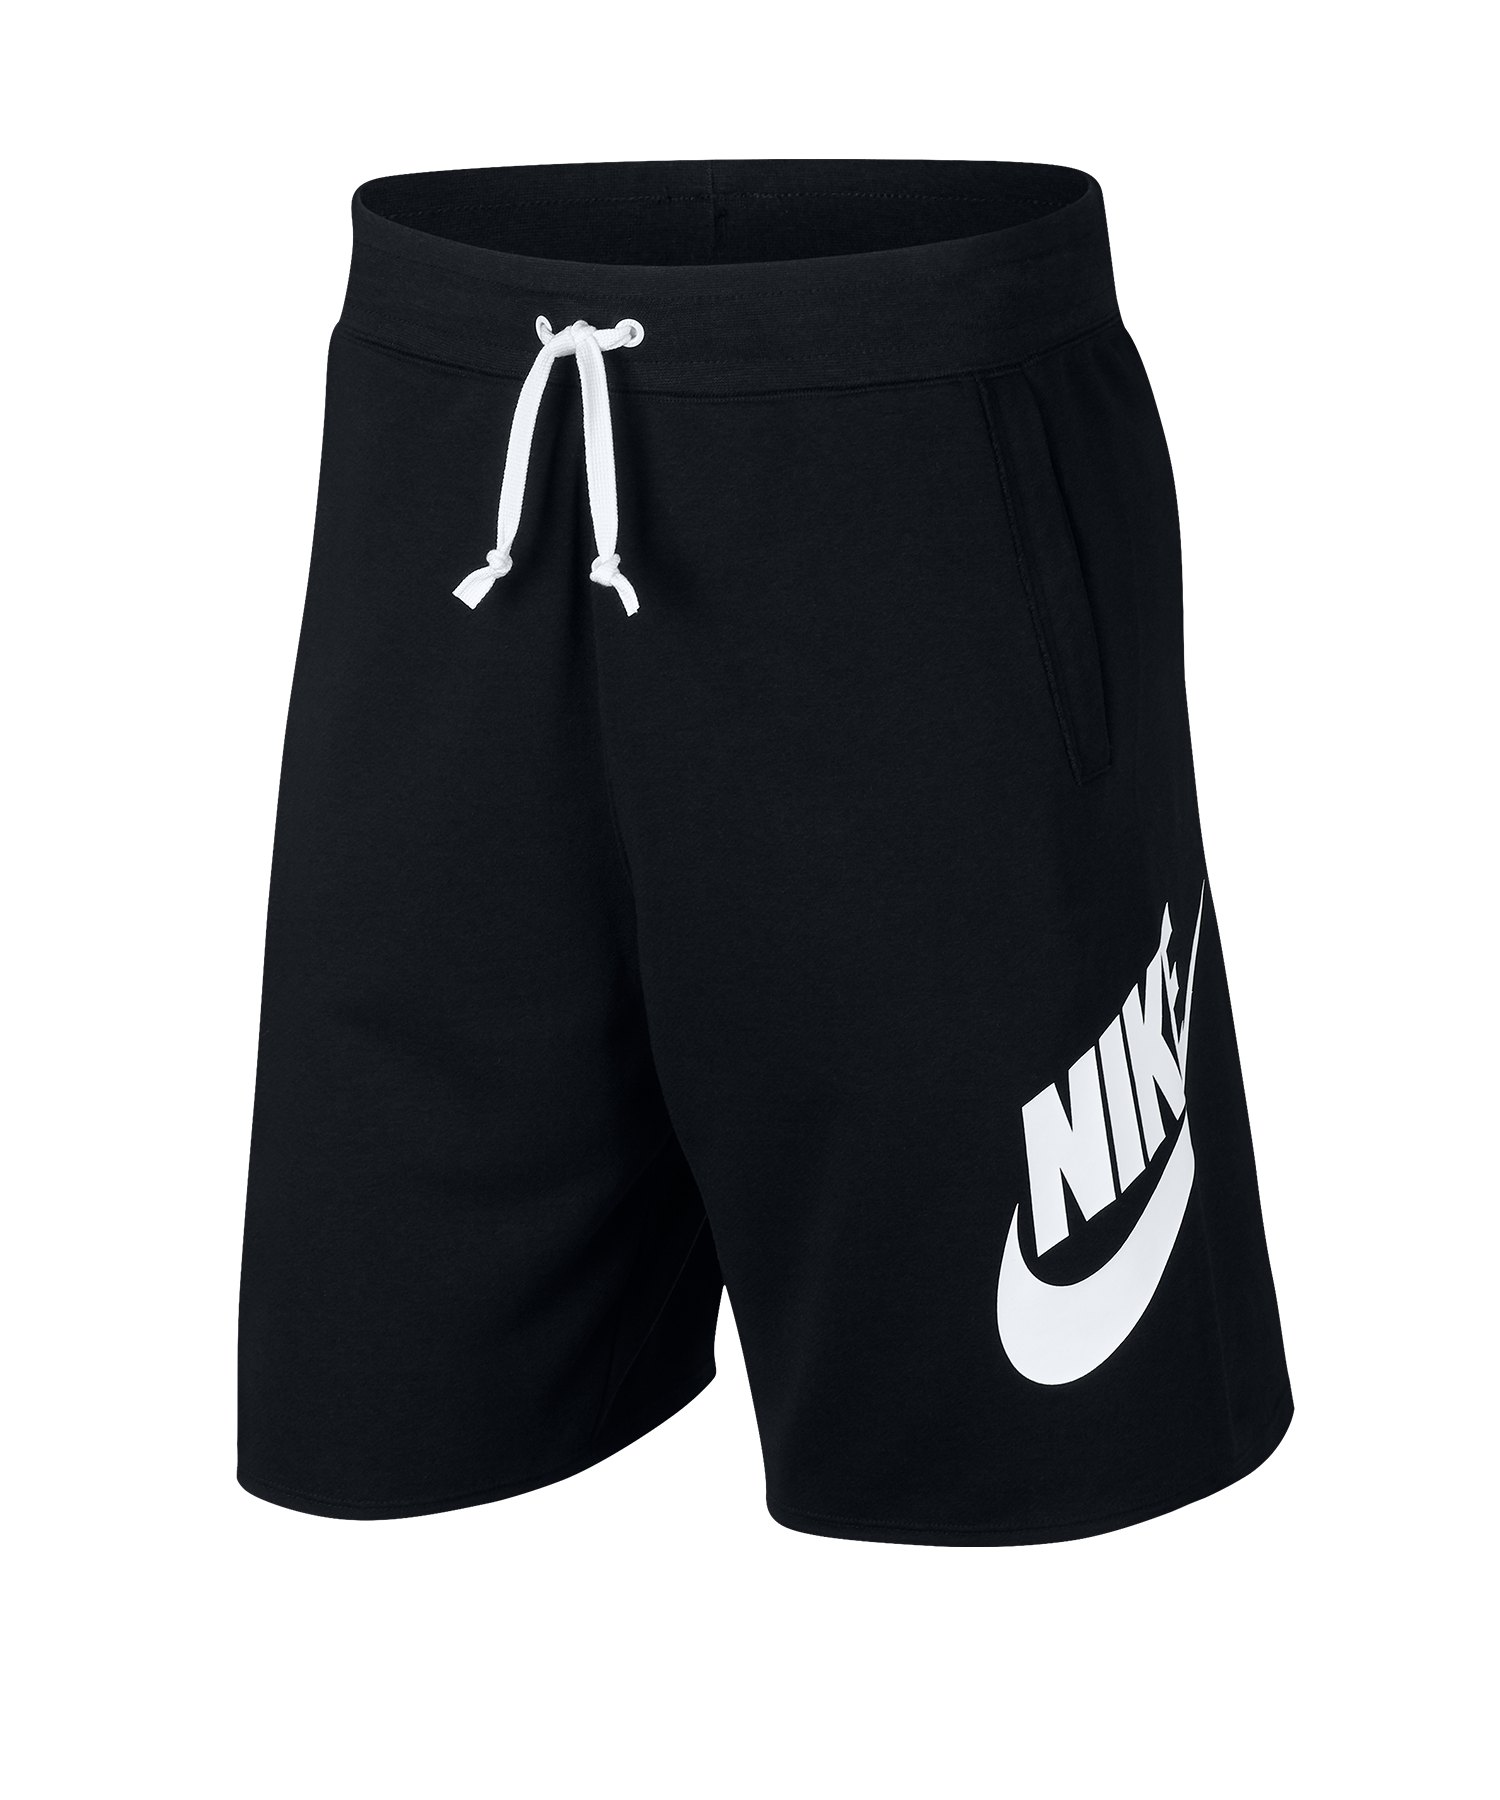 Nike Sportswear Alumni Short Schwarz Weiss F010 - schwarz